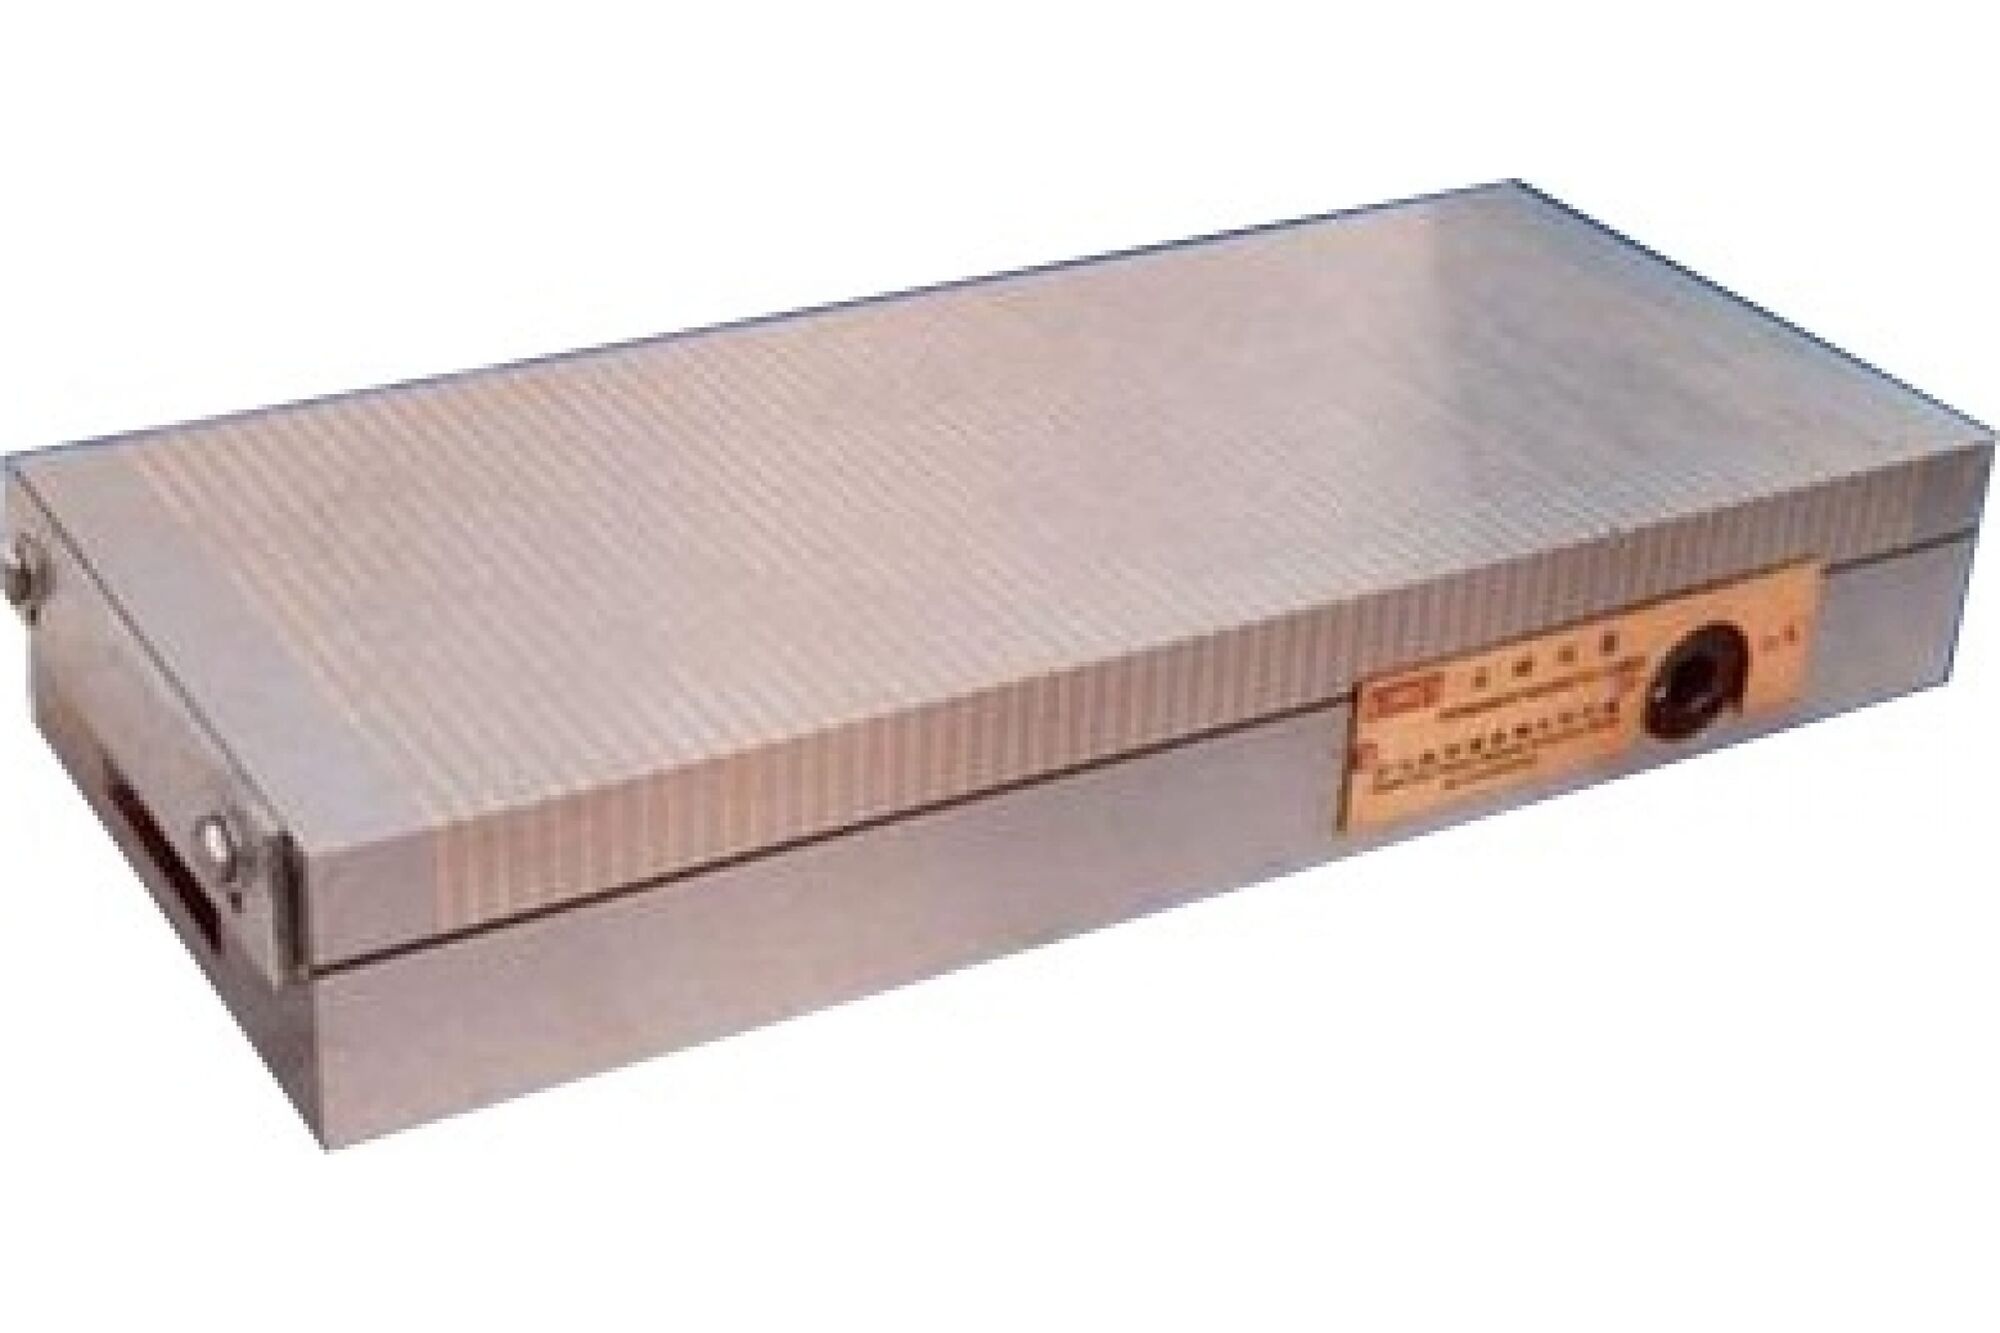 Плита CNIC магнитная плоская Х91 500x1000 электромаг-ная сила притяжения 160N/см кв.66120-14 53831